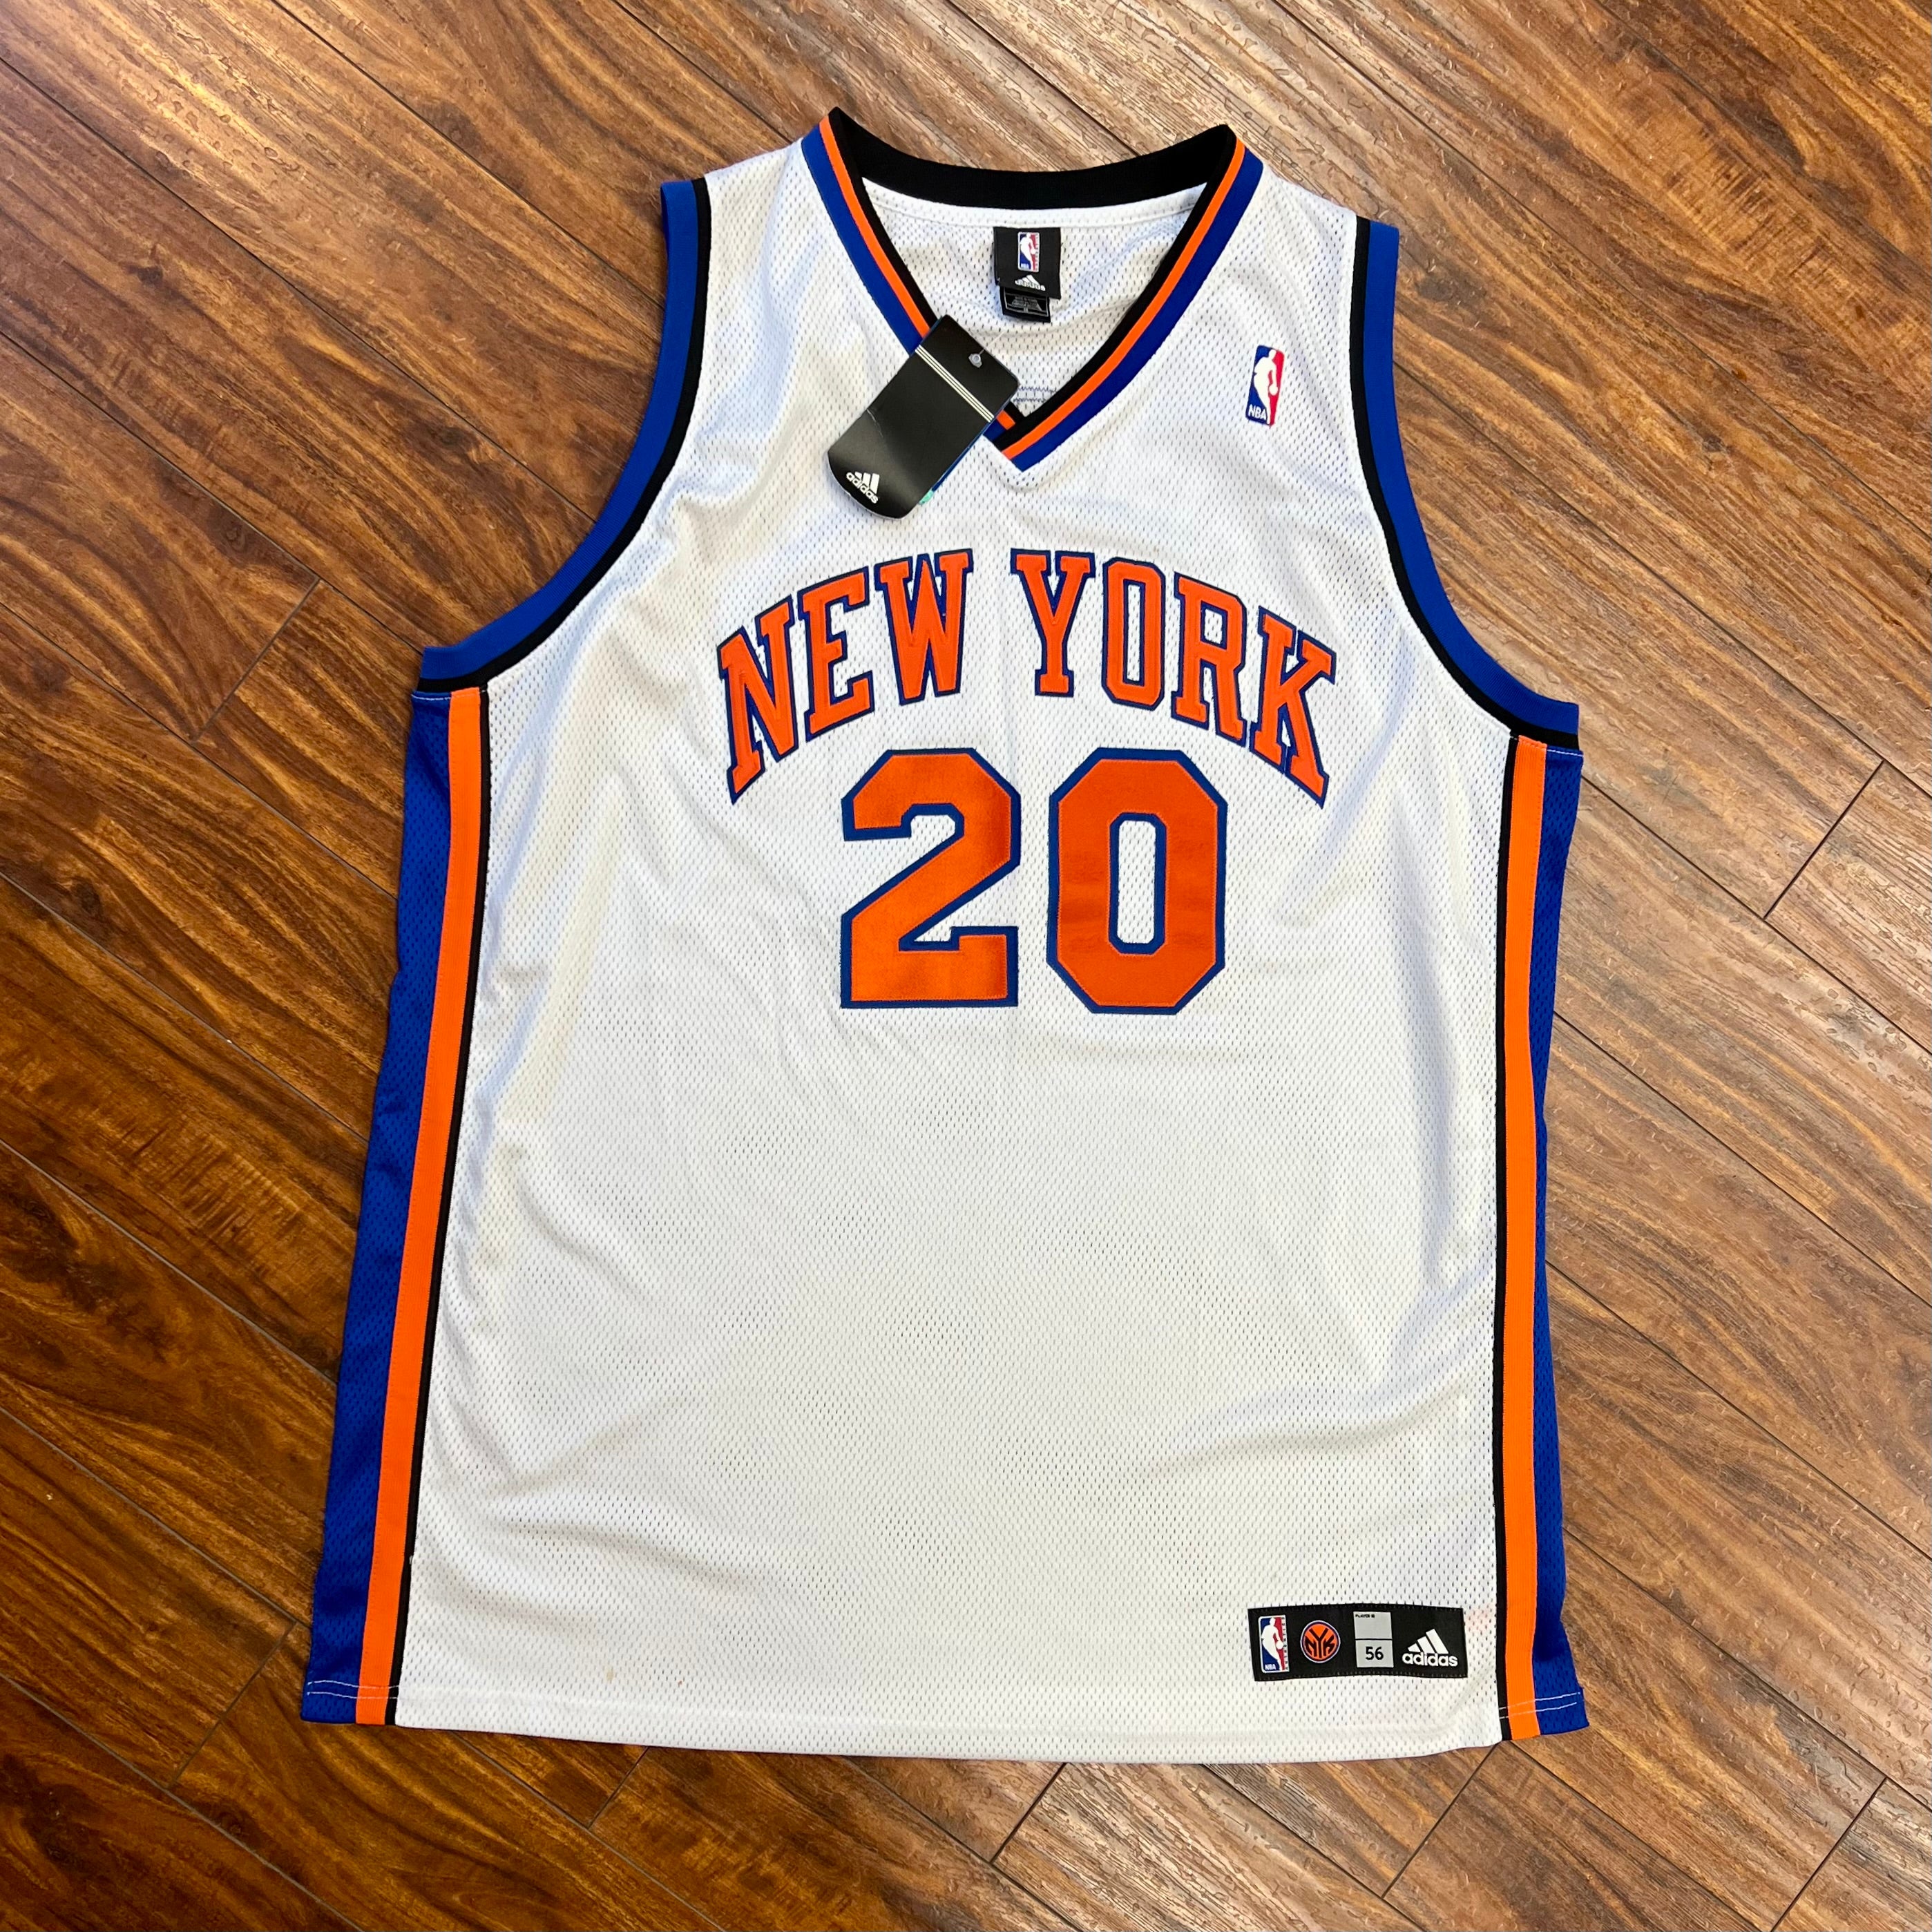 Derechos de autor corriente capa Adidas Authentic Late 00's NY Knicks Jared Jeffries Autographed Jersey